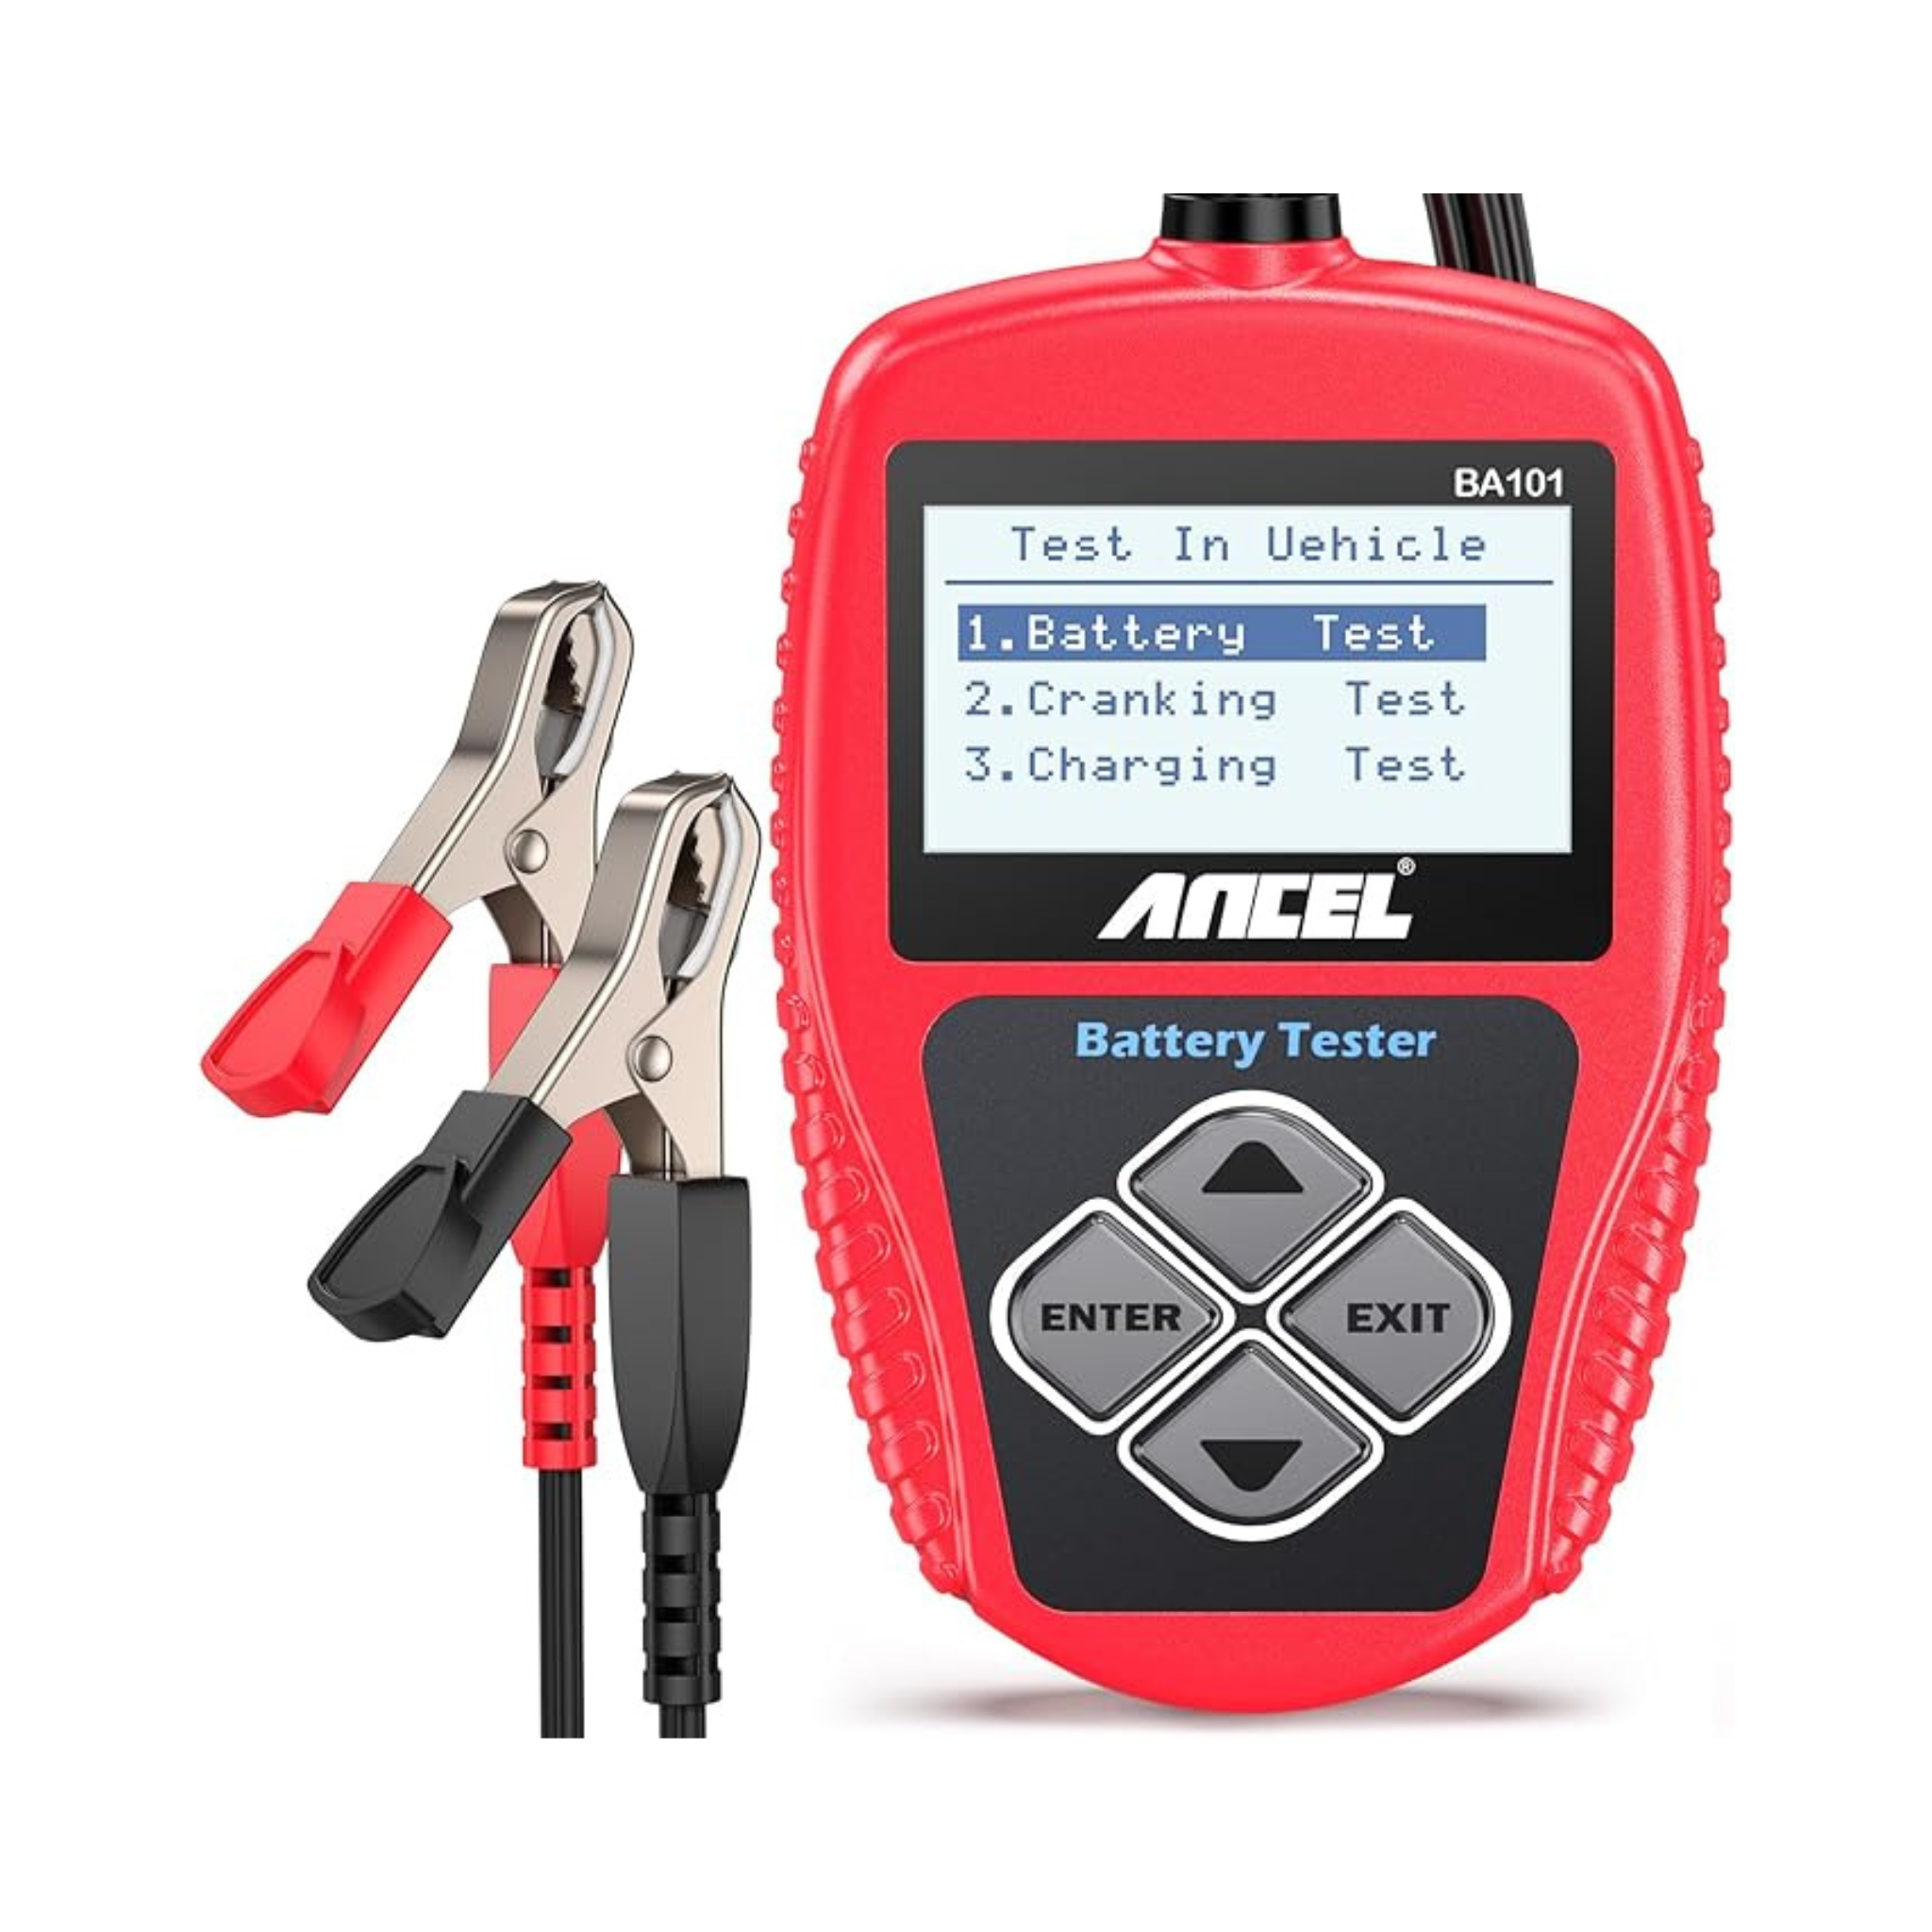 Ancel Ba101 12V Digital Car Battery Tester